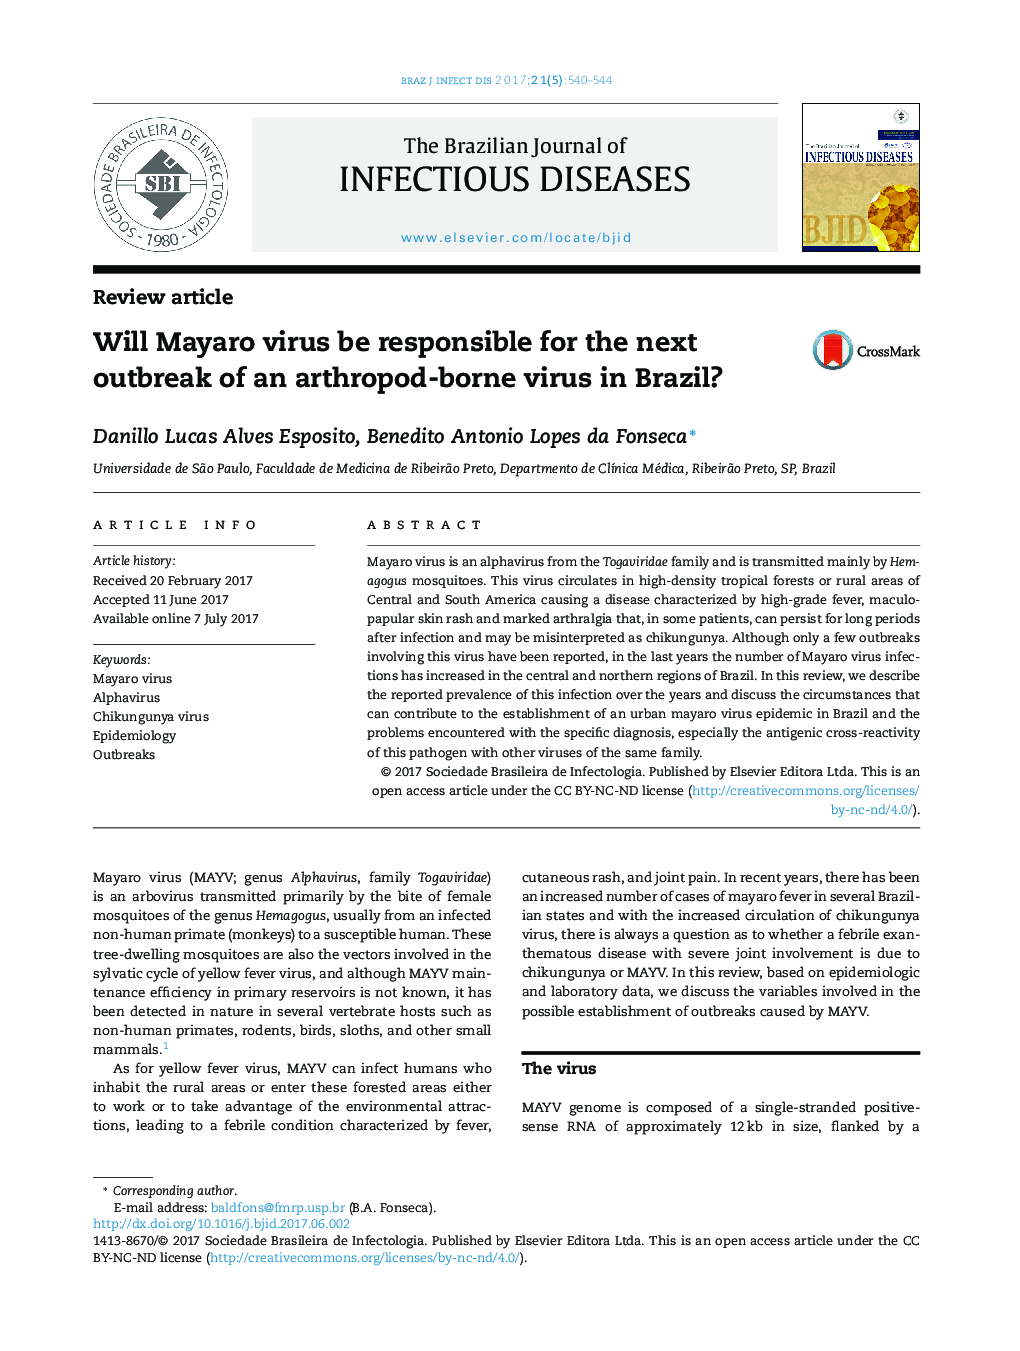 Will Mayaro virus be responsible for the next outbreak of an arthropod-borne virus in Brazil?